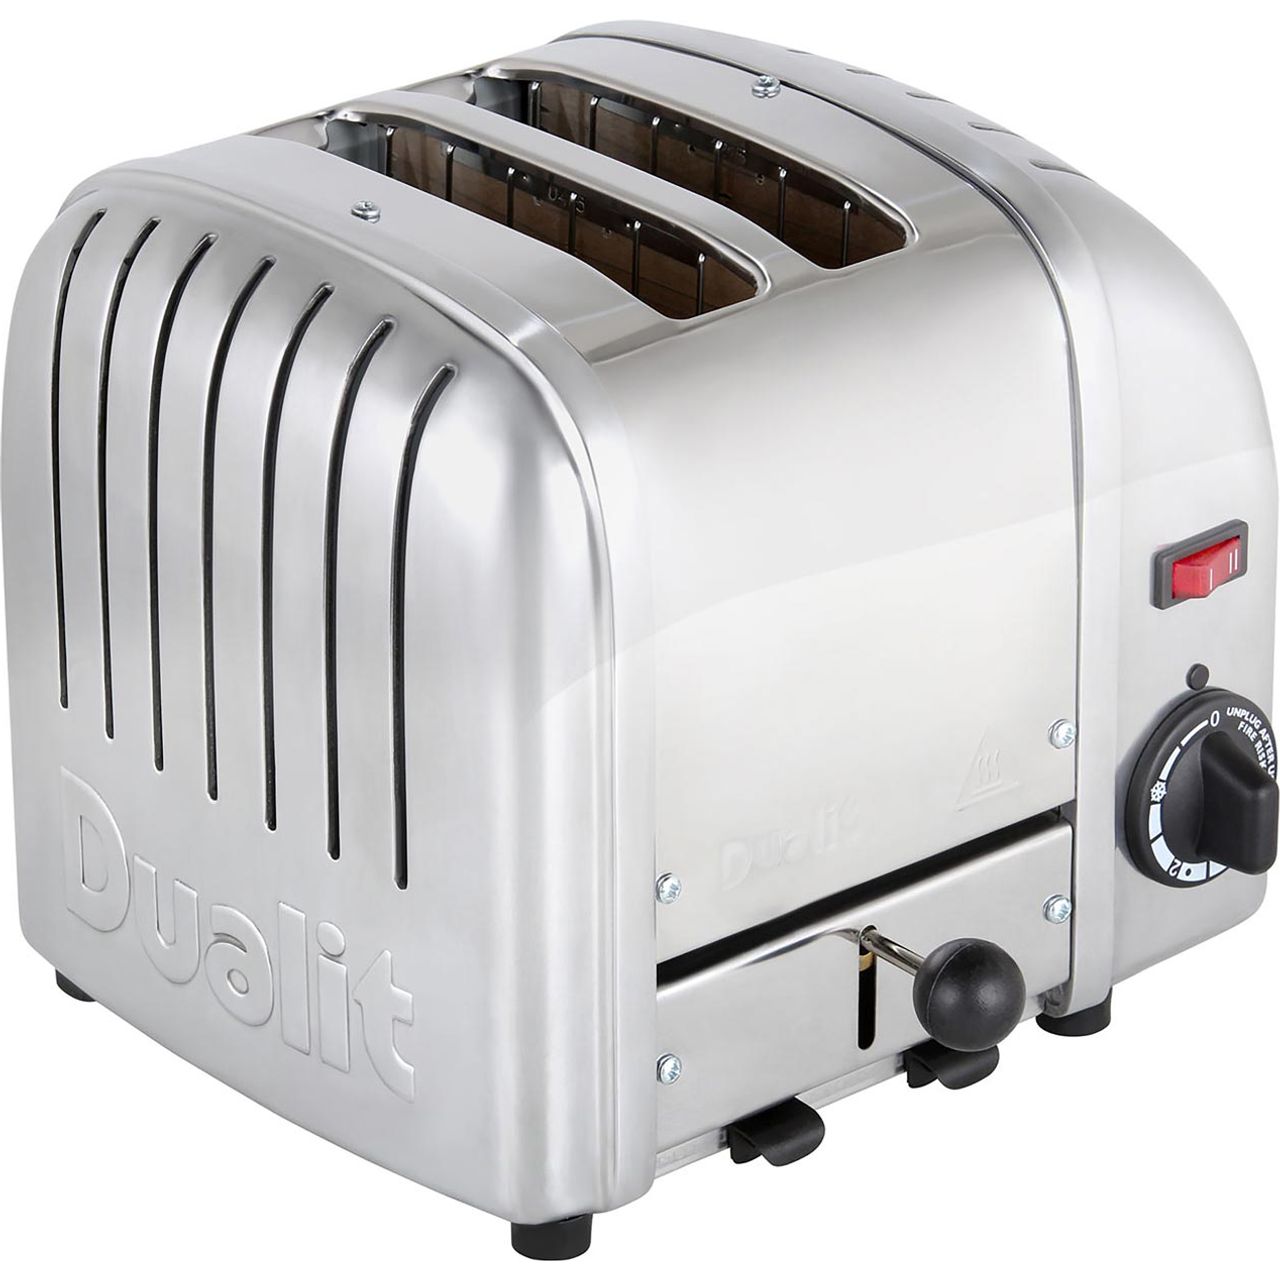 Dualit Classic 2-Slice Toaster - Chrome